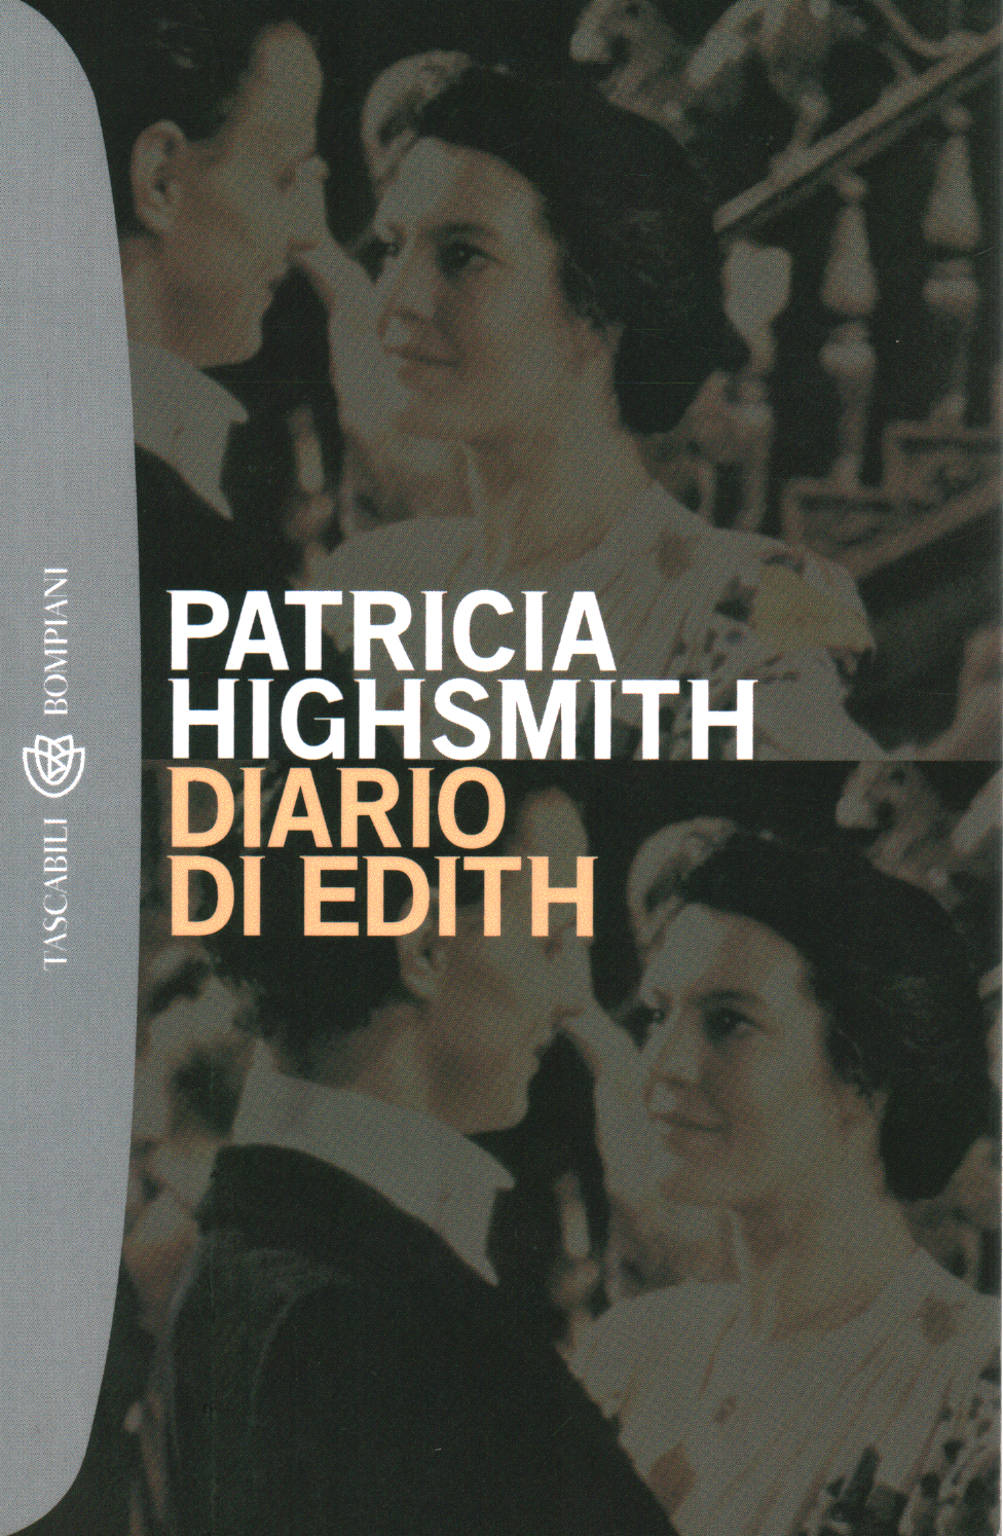 The diary of Edith, Patricia Highsmith